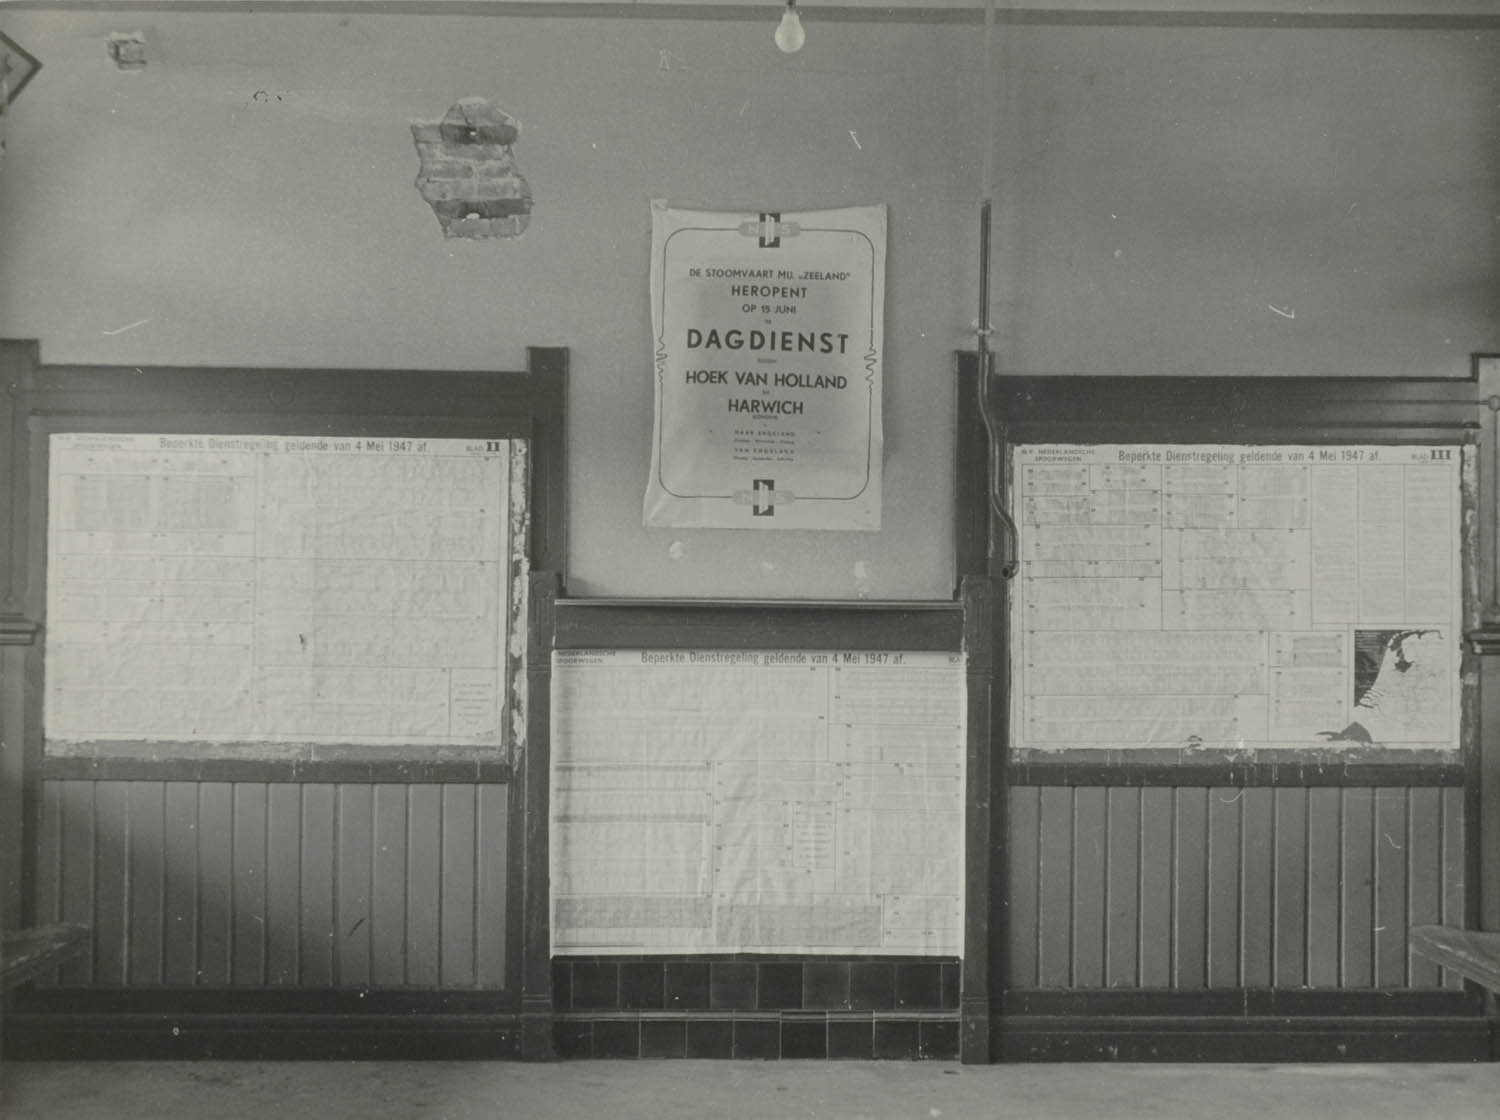 Nunspeet 1947, tegenwoordige toestand van het station